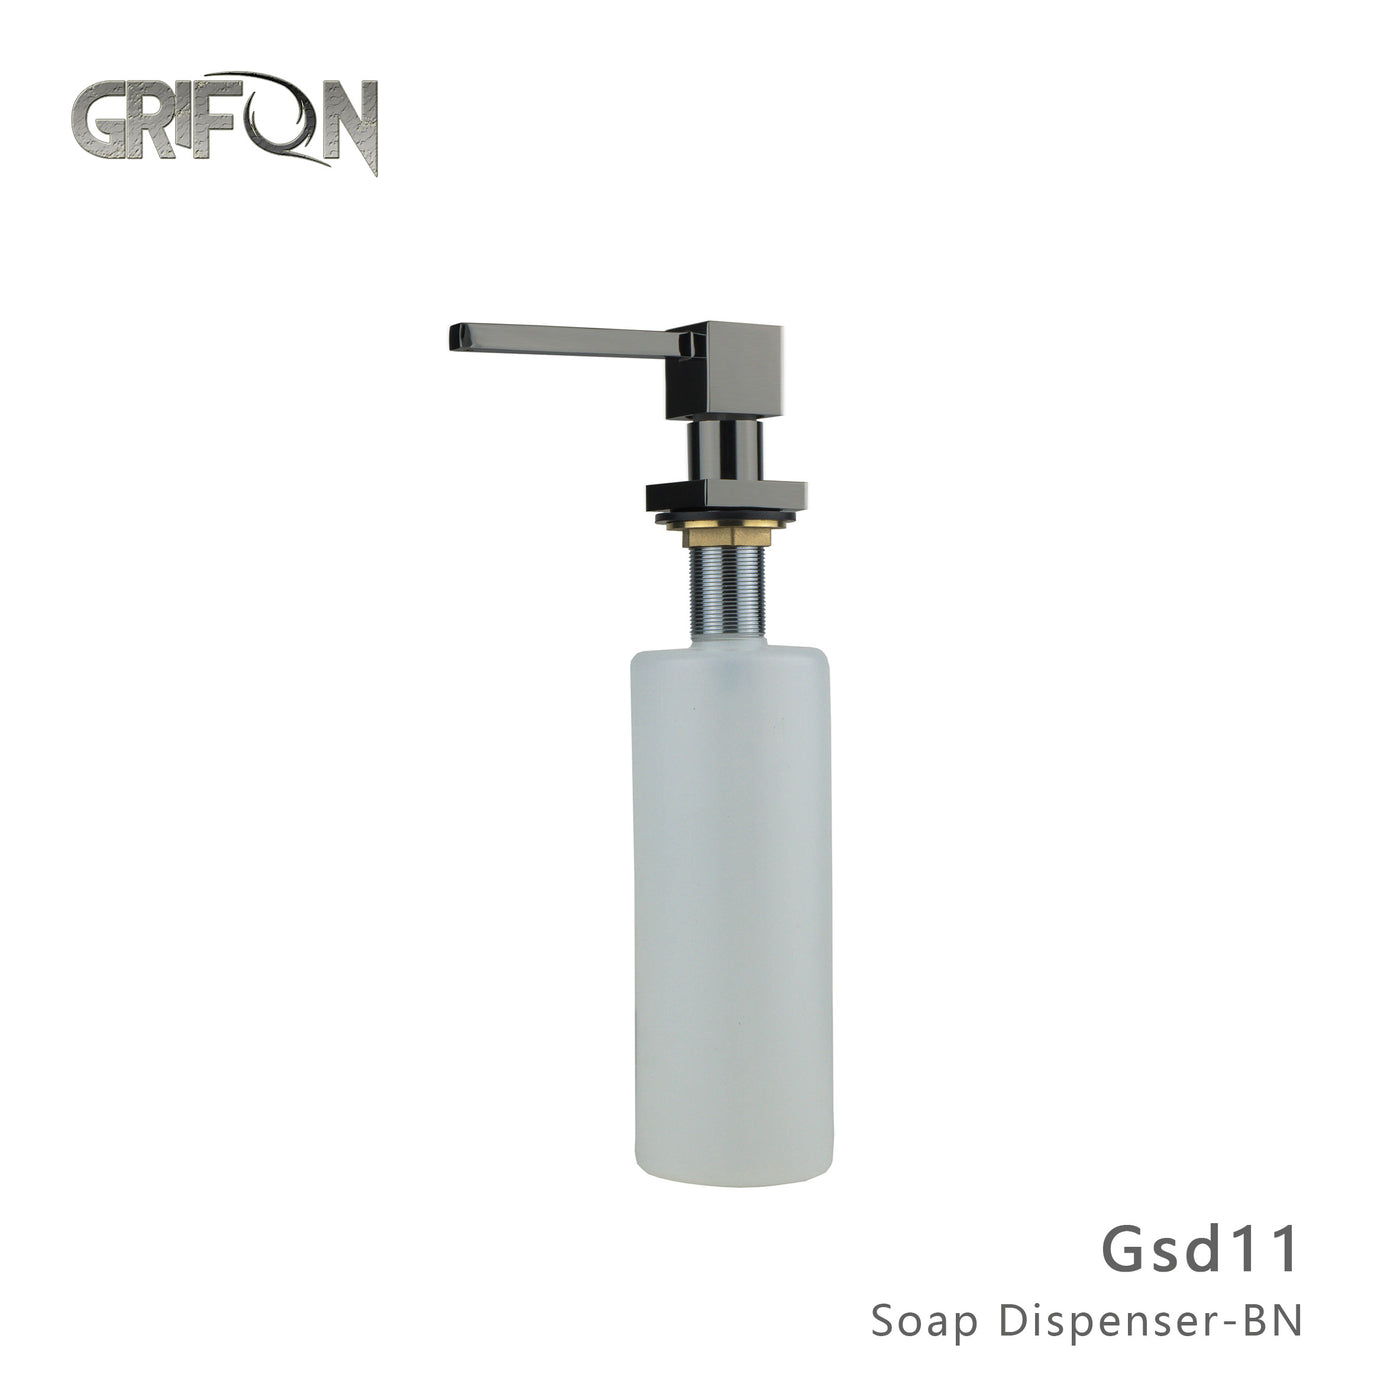 SOAP DISPENSER - GSD11 Kitchen Soap and Lotion Dispenser in Black Stainless Steel